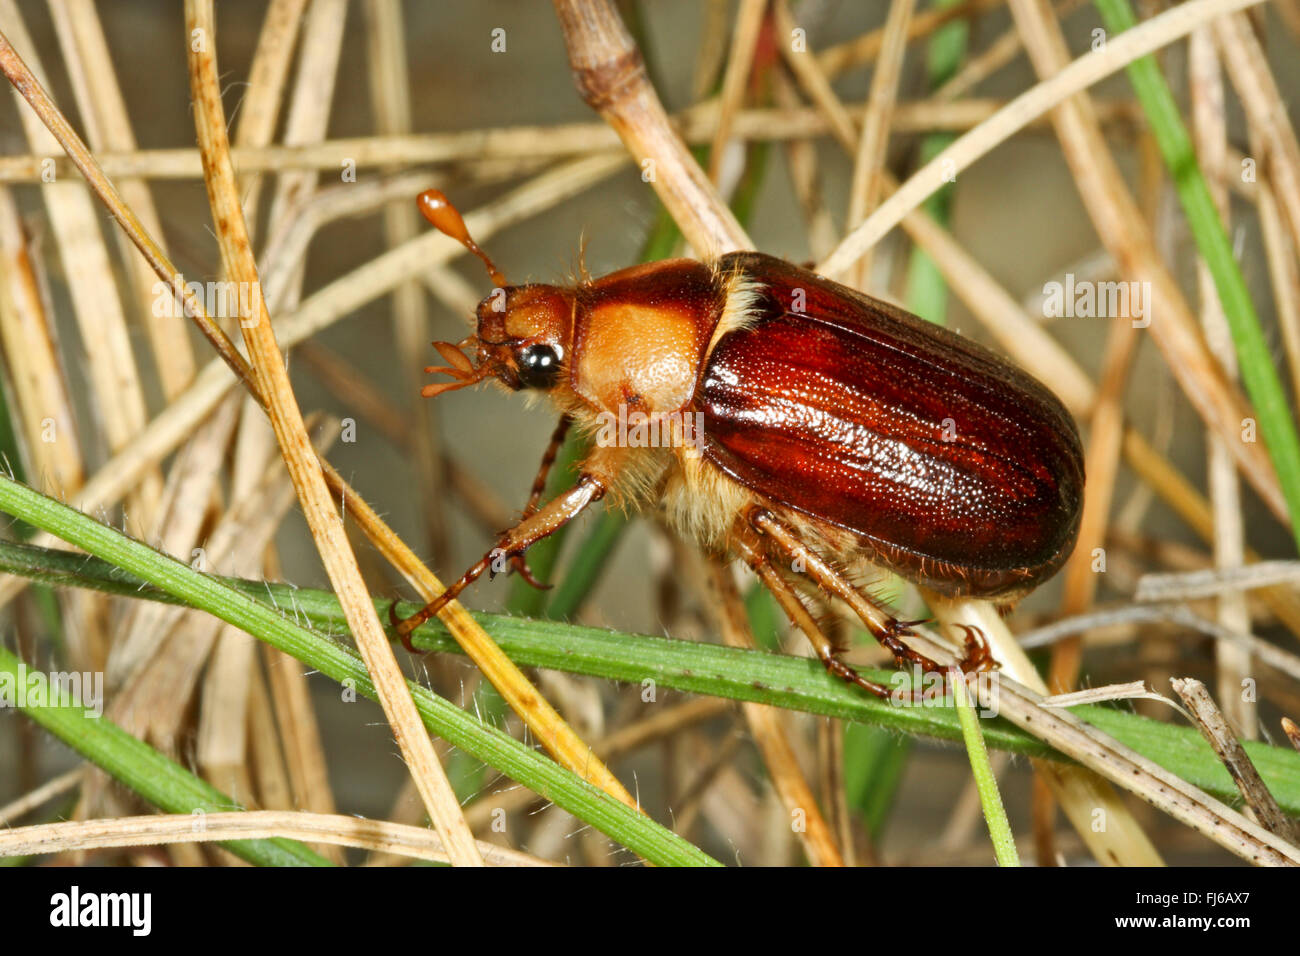 June bug (Rhizotrogus maculicollis), on grass Stock Photo